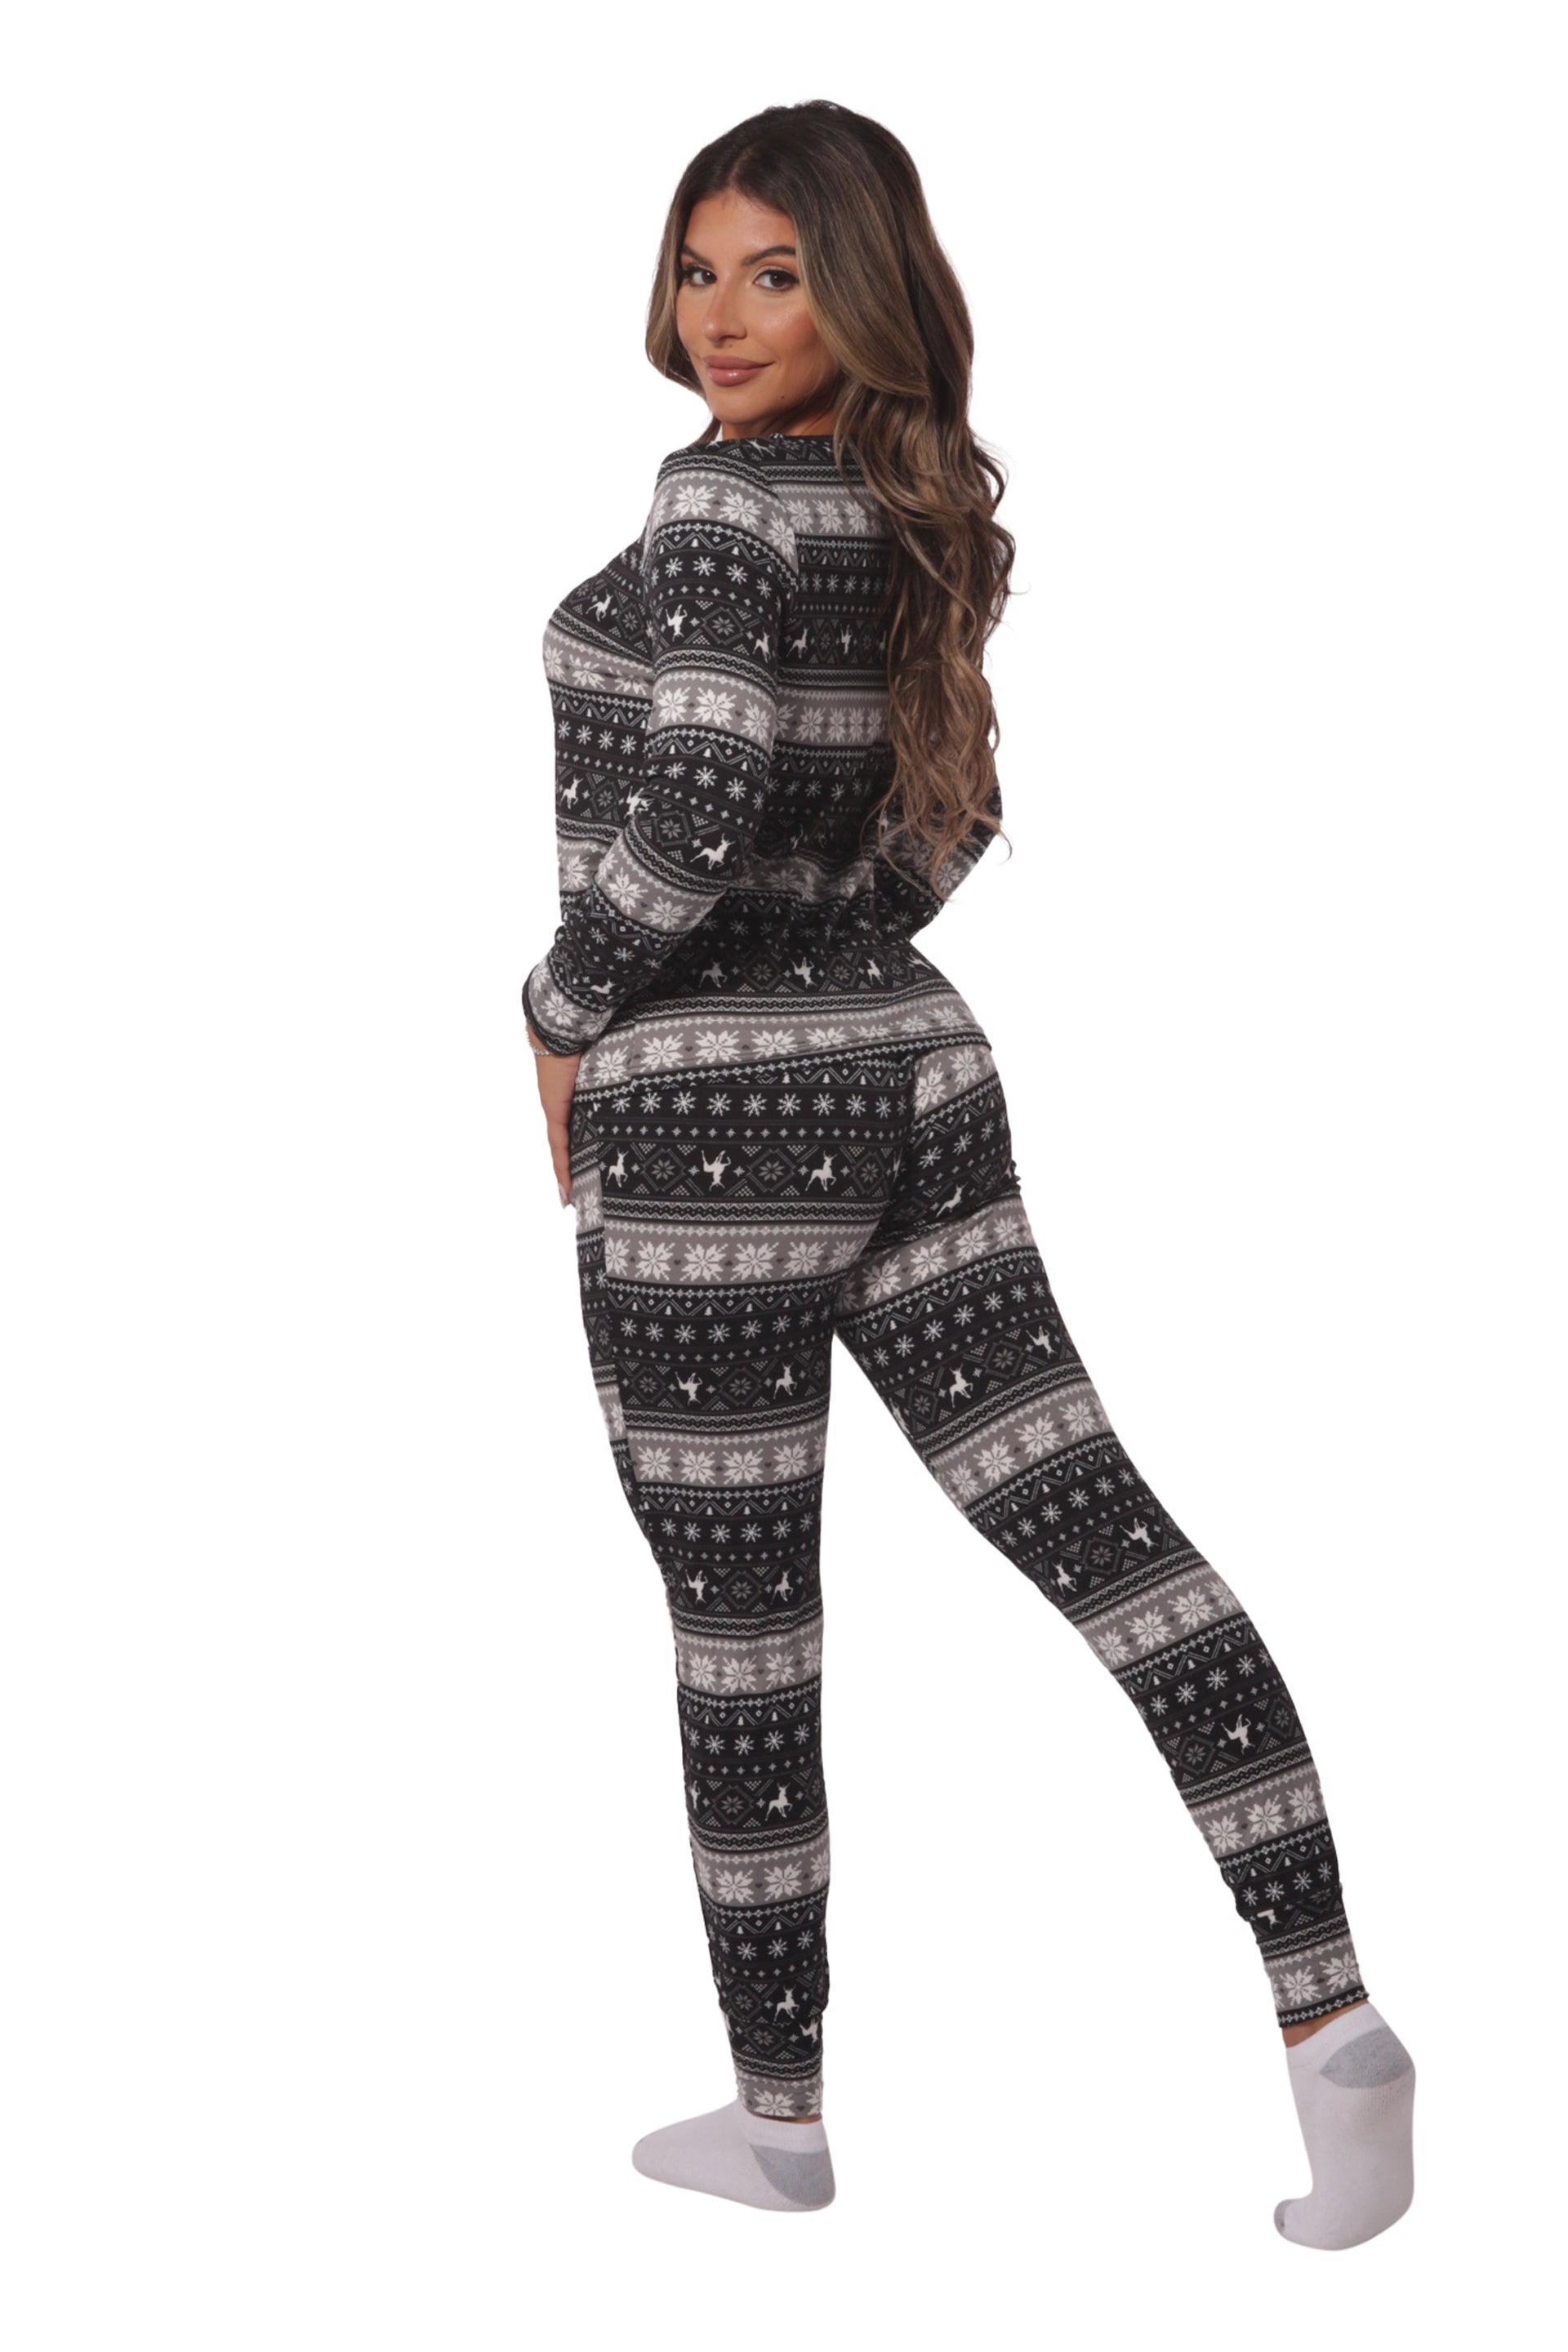 Wholesale Womens Holiday Print Fleece Lined Long Sleeve Top & Sweatpants Pajama Set - Black, Gray & White